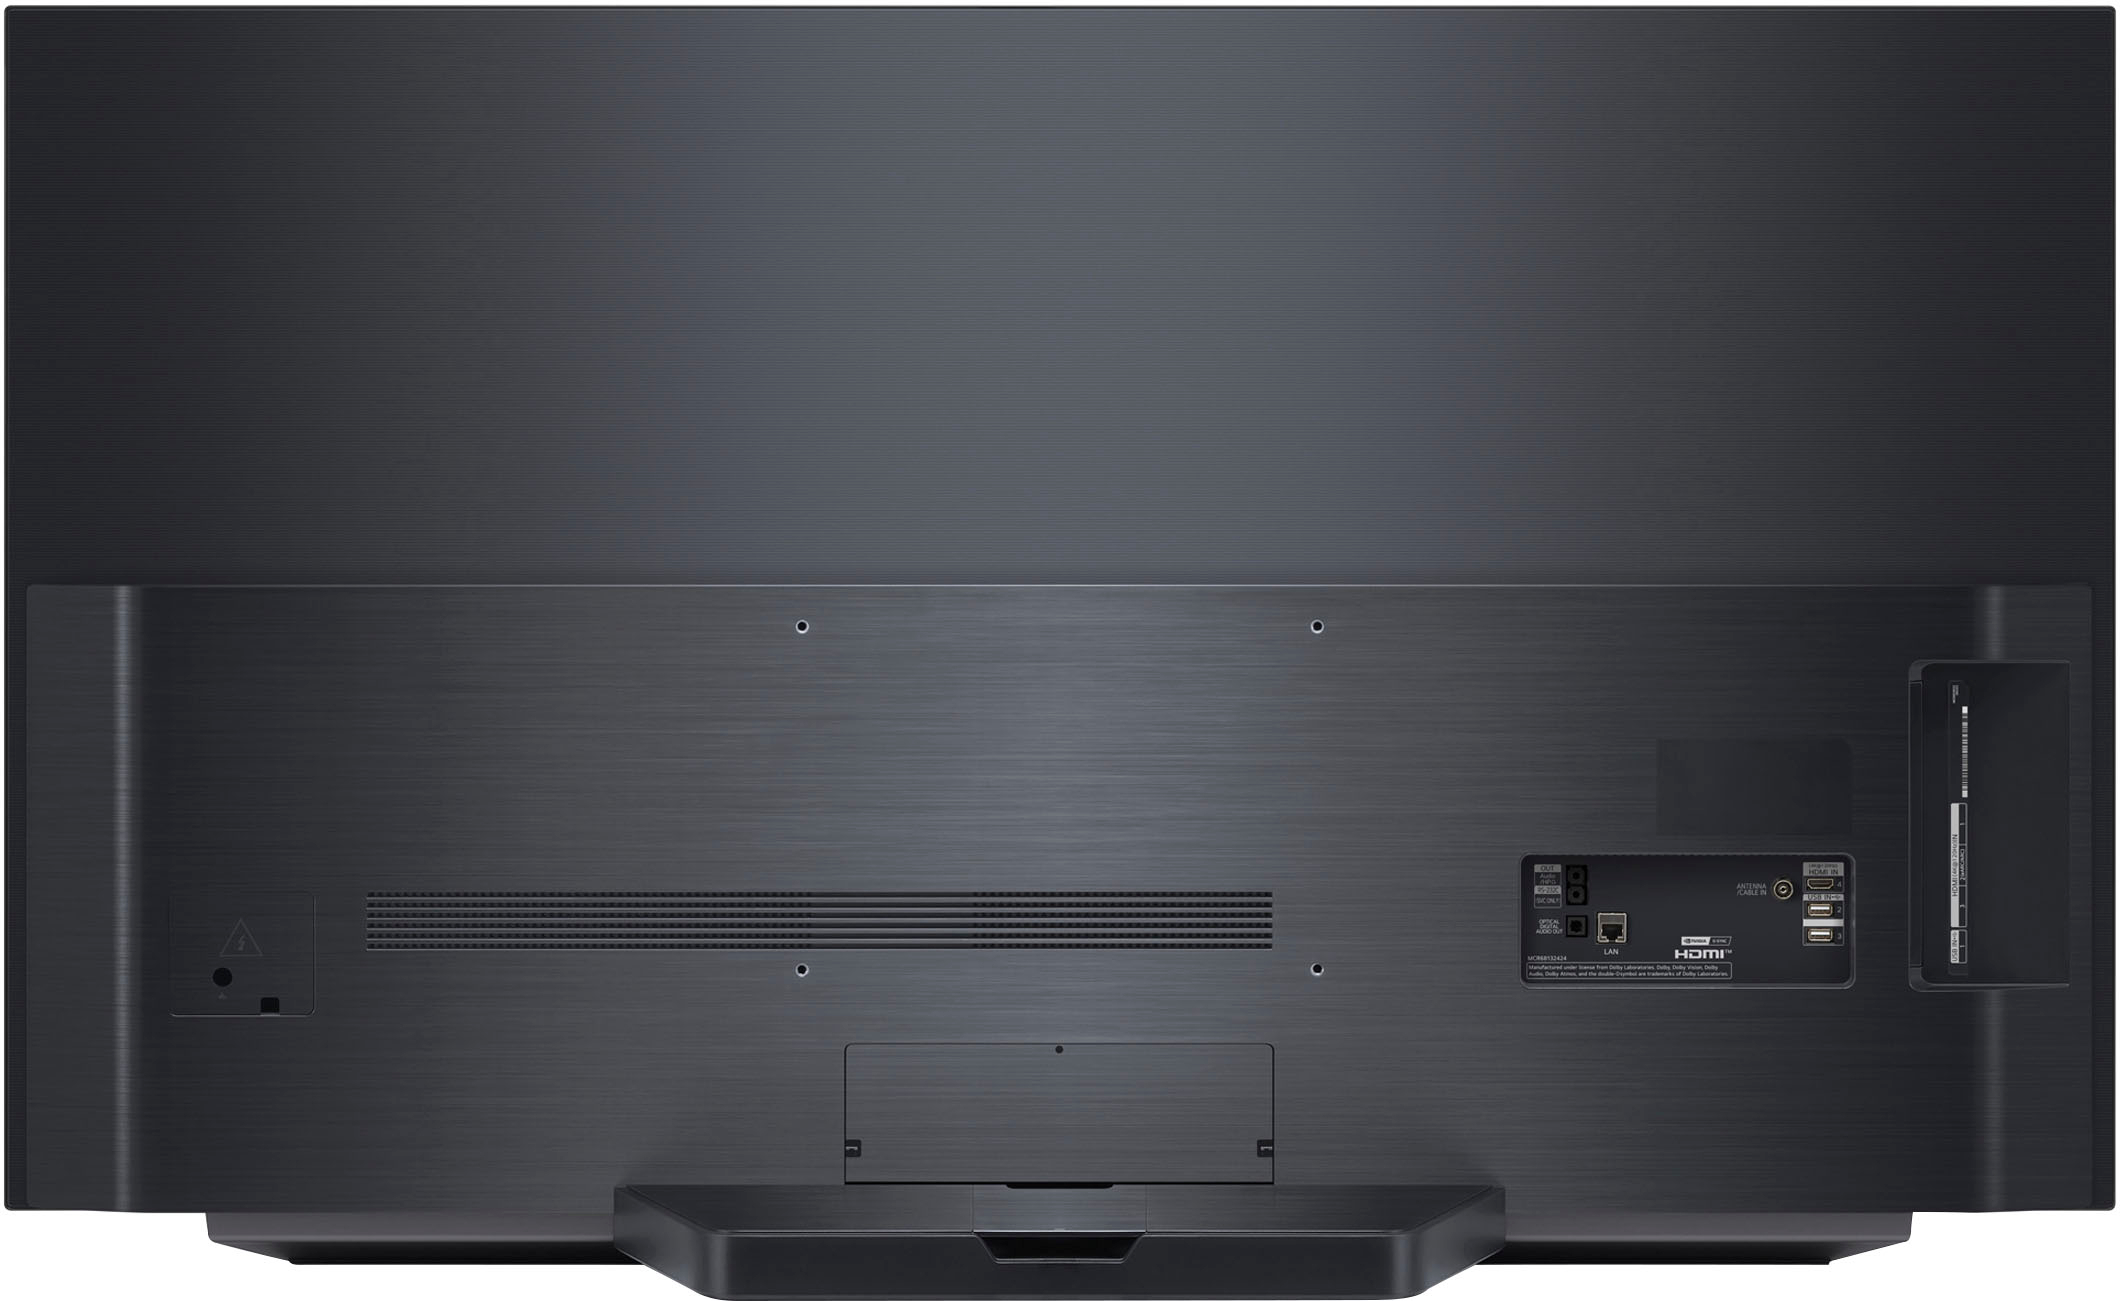 LG 65 Class C1 Series OLED 4K UHD Smart webOS TV OLED65C1PUB - Best Buy